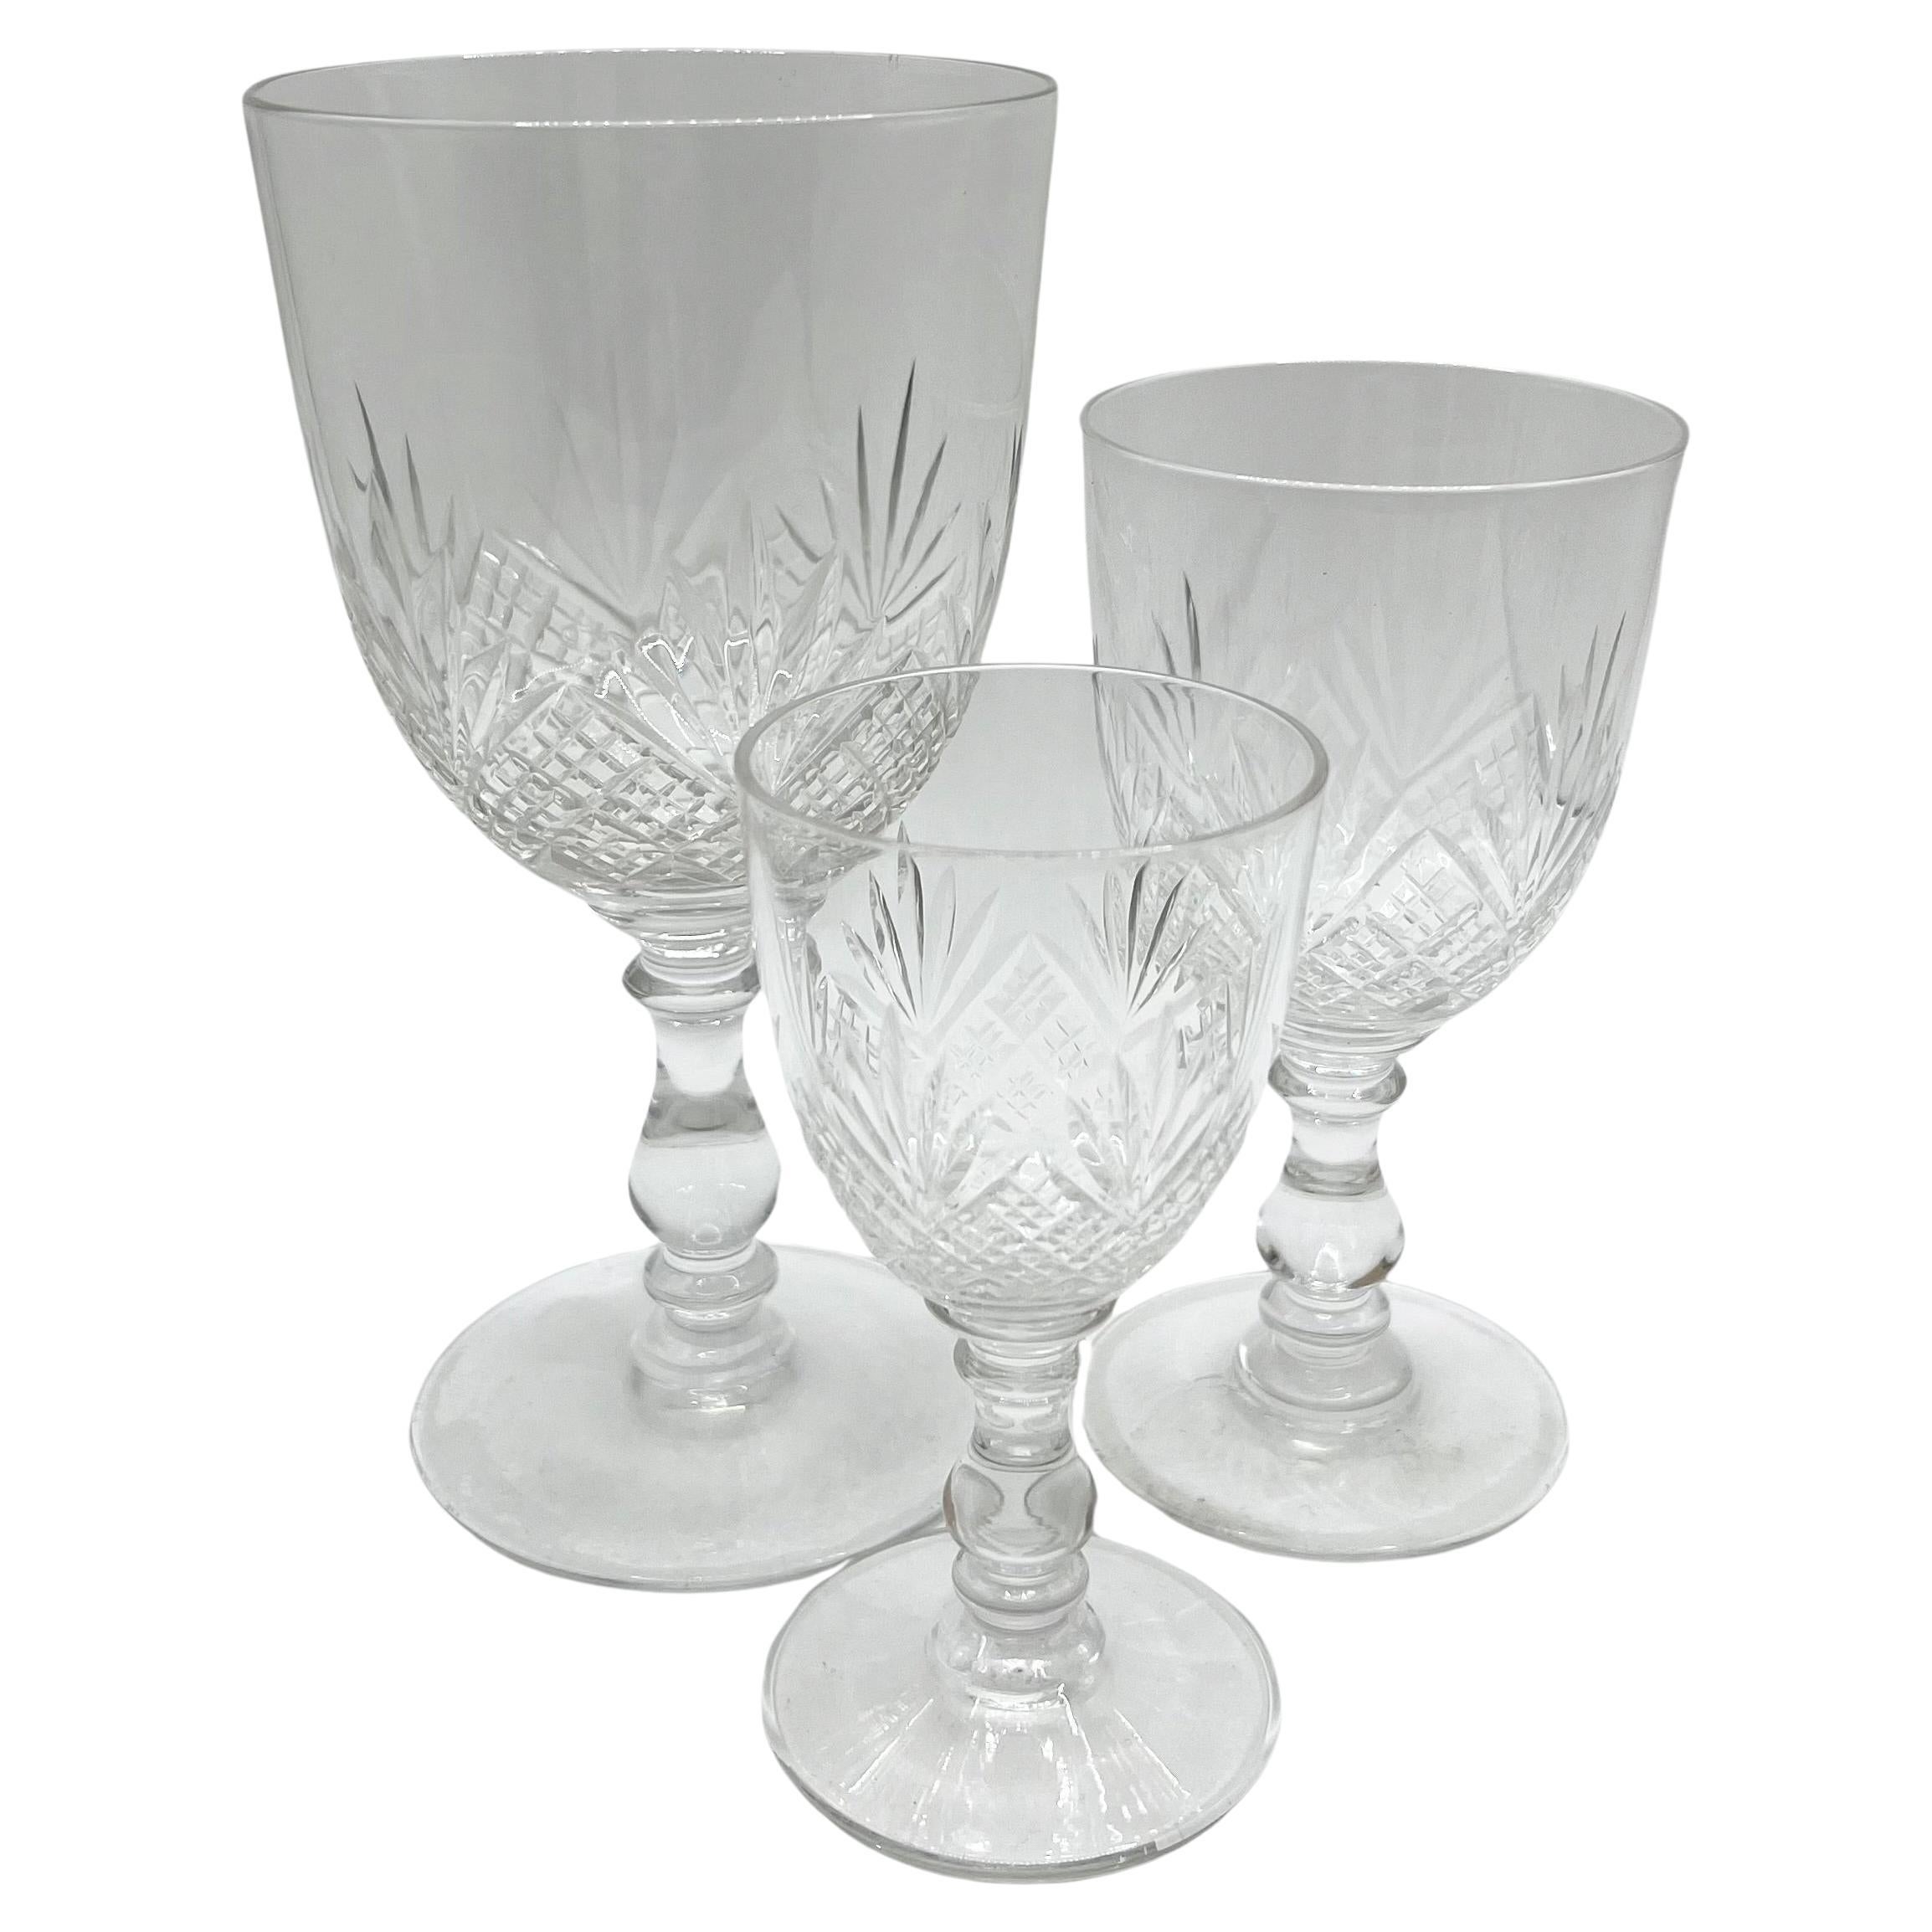 French antique set of 3 Baccarat crystal glasses - France - Douai model